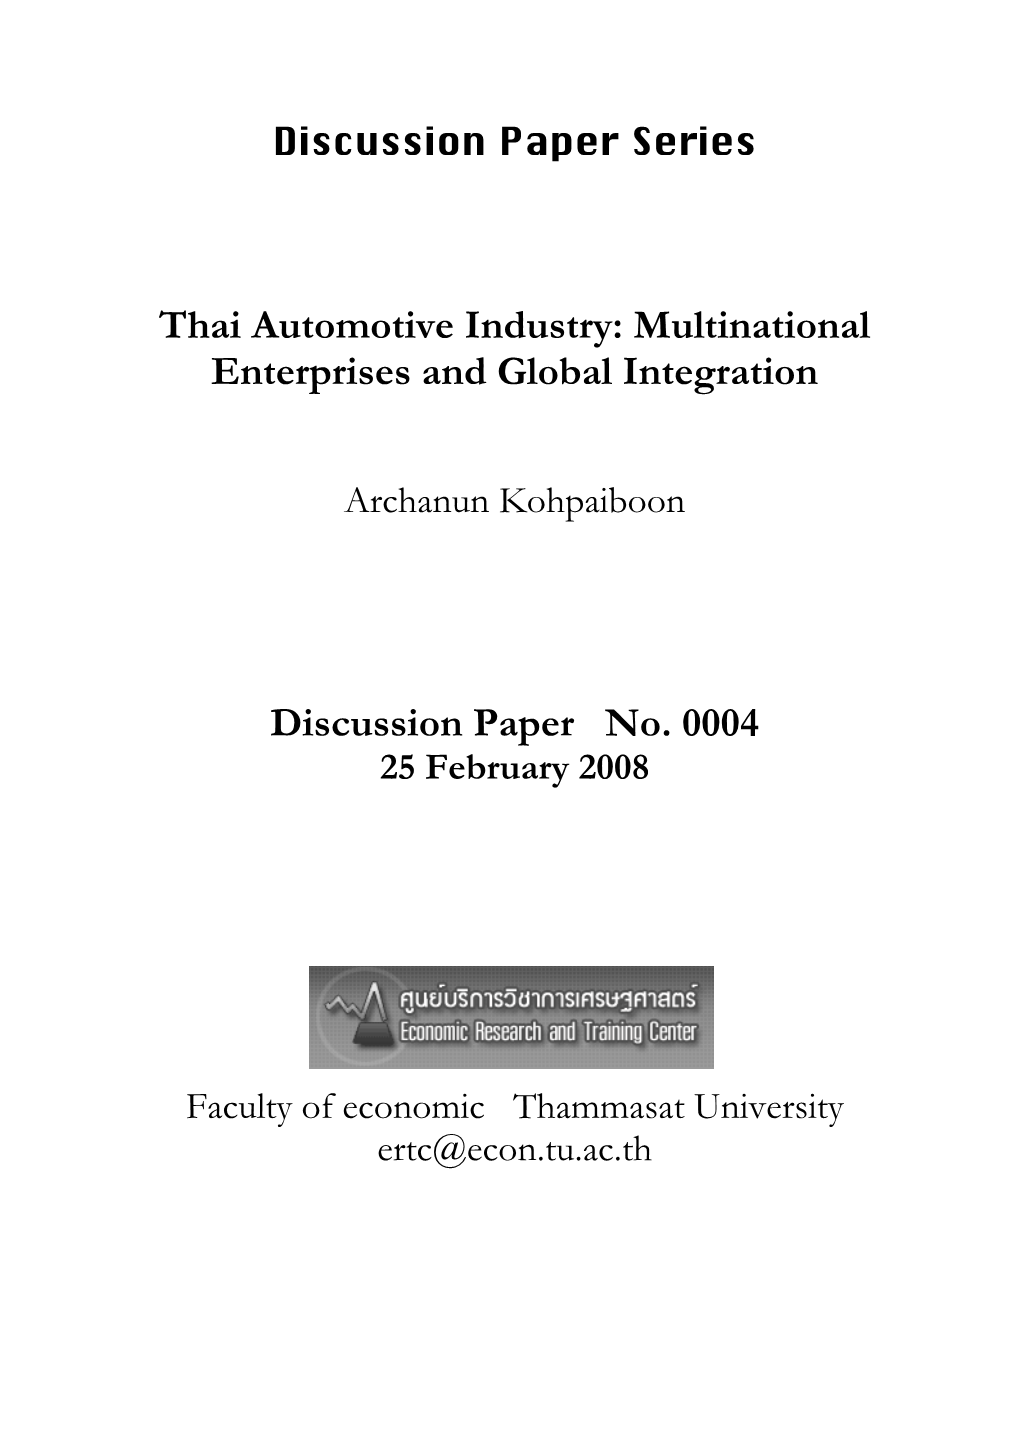 Thai Automotive Industry: Multinational Enterprises and Global Integration